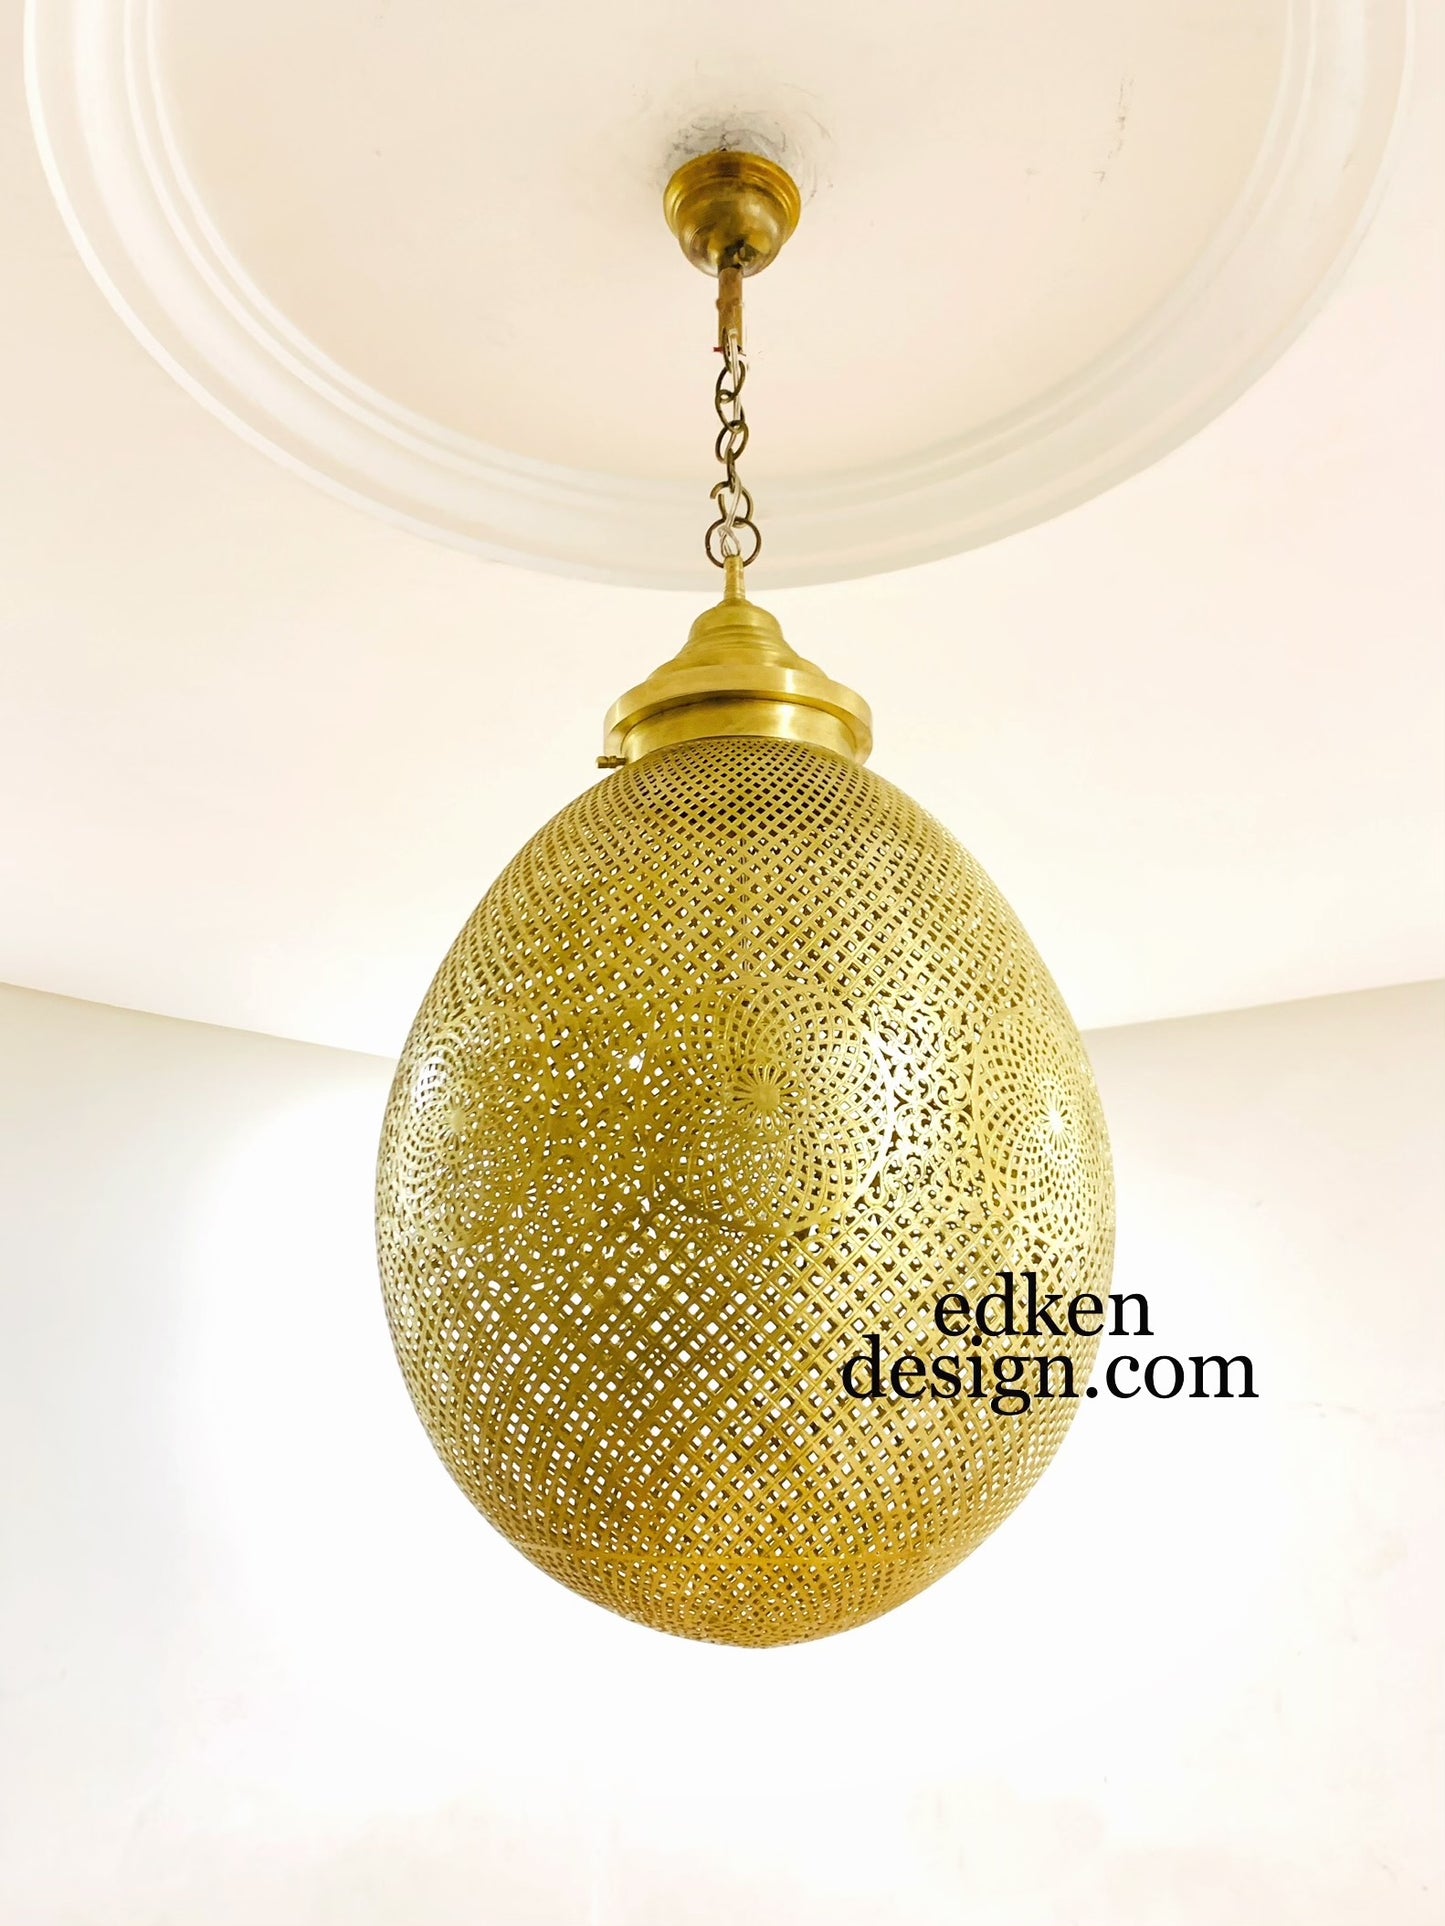 EDKEN LIGHTS - Switch Off Morocco Ceiling Lamp Shades Lemon Shape Design Fixture 